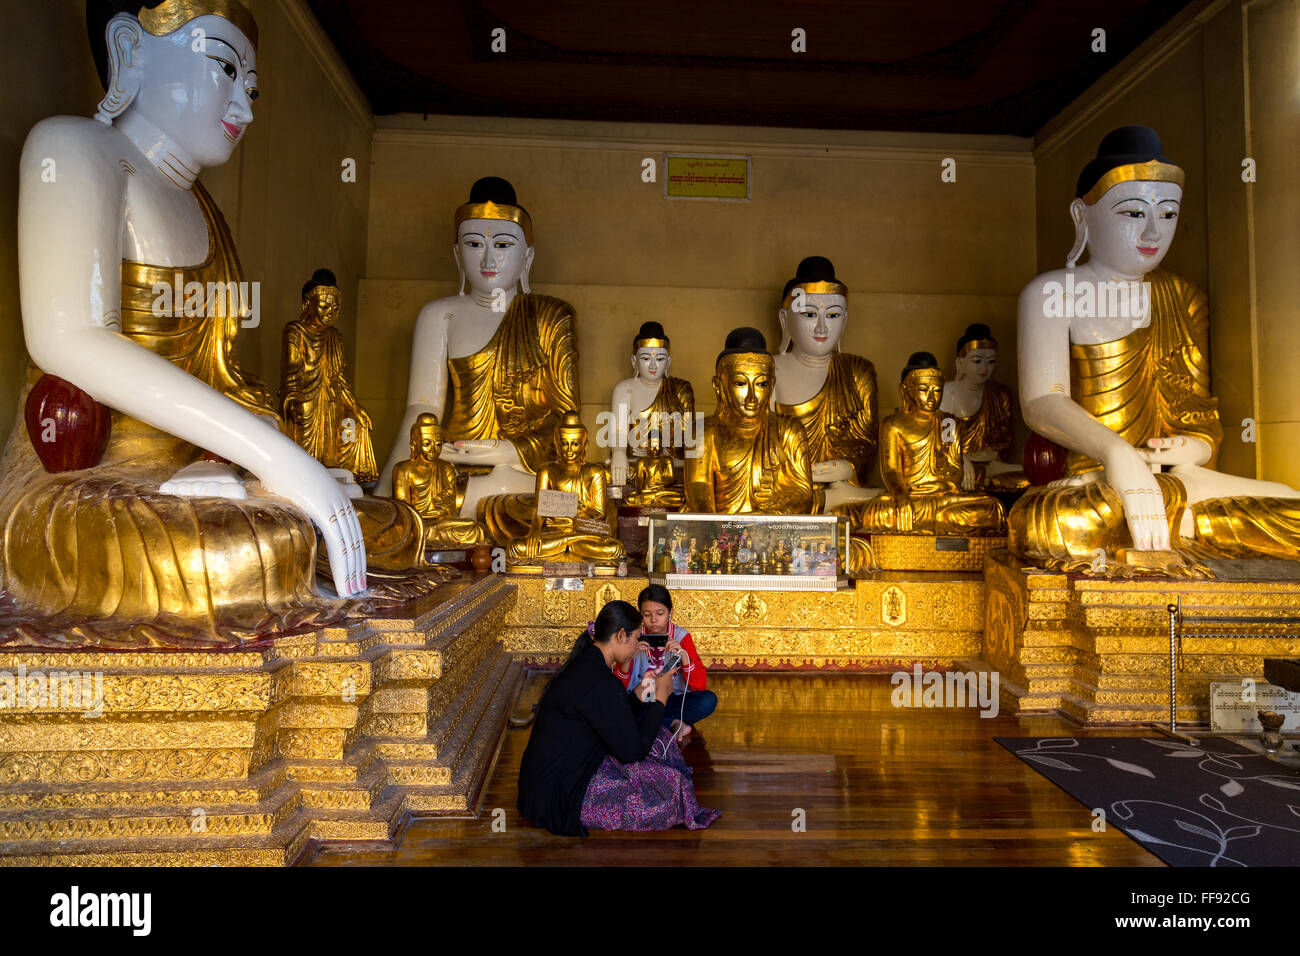 Yangon, Myanmar, 9th November 2015: The Shwedagon pagoda in Yangon embraces people, not just to worship, here two young girls ar Stock Photo